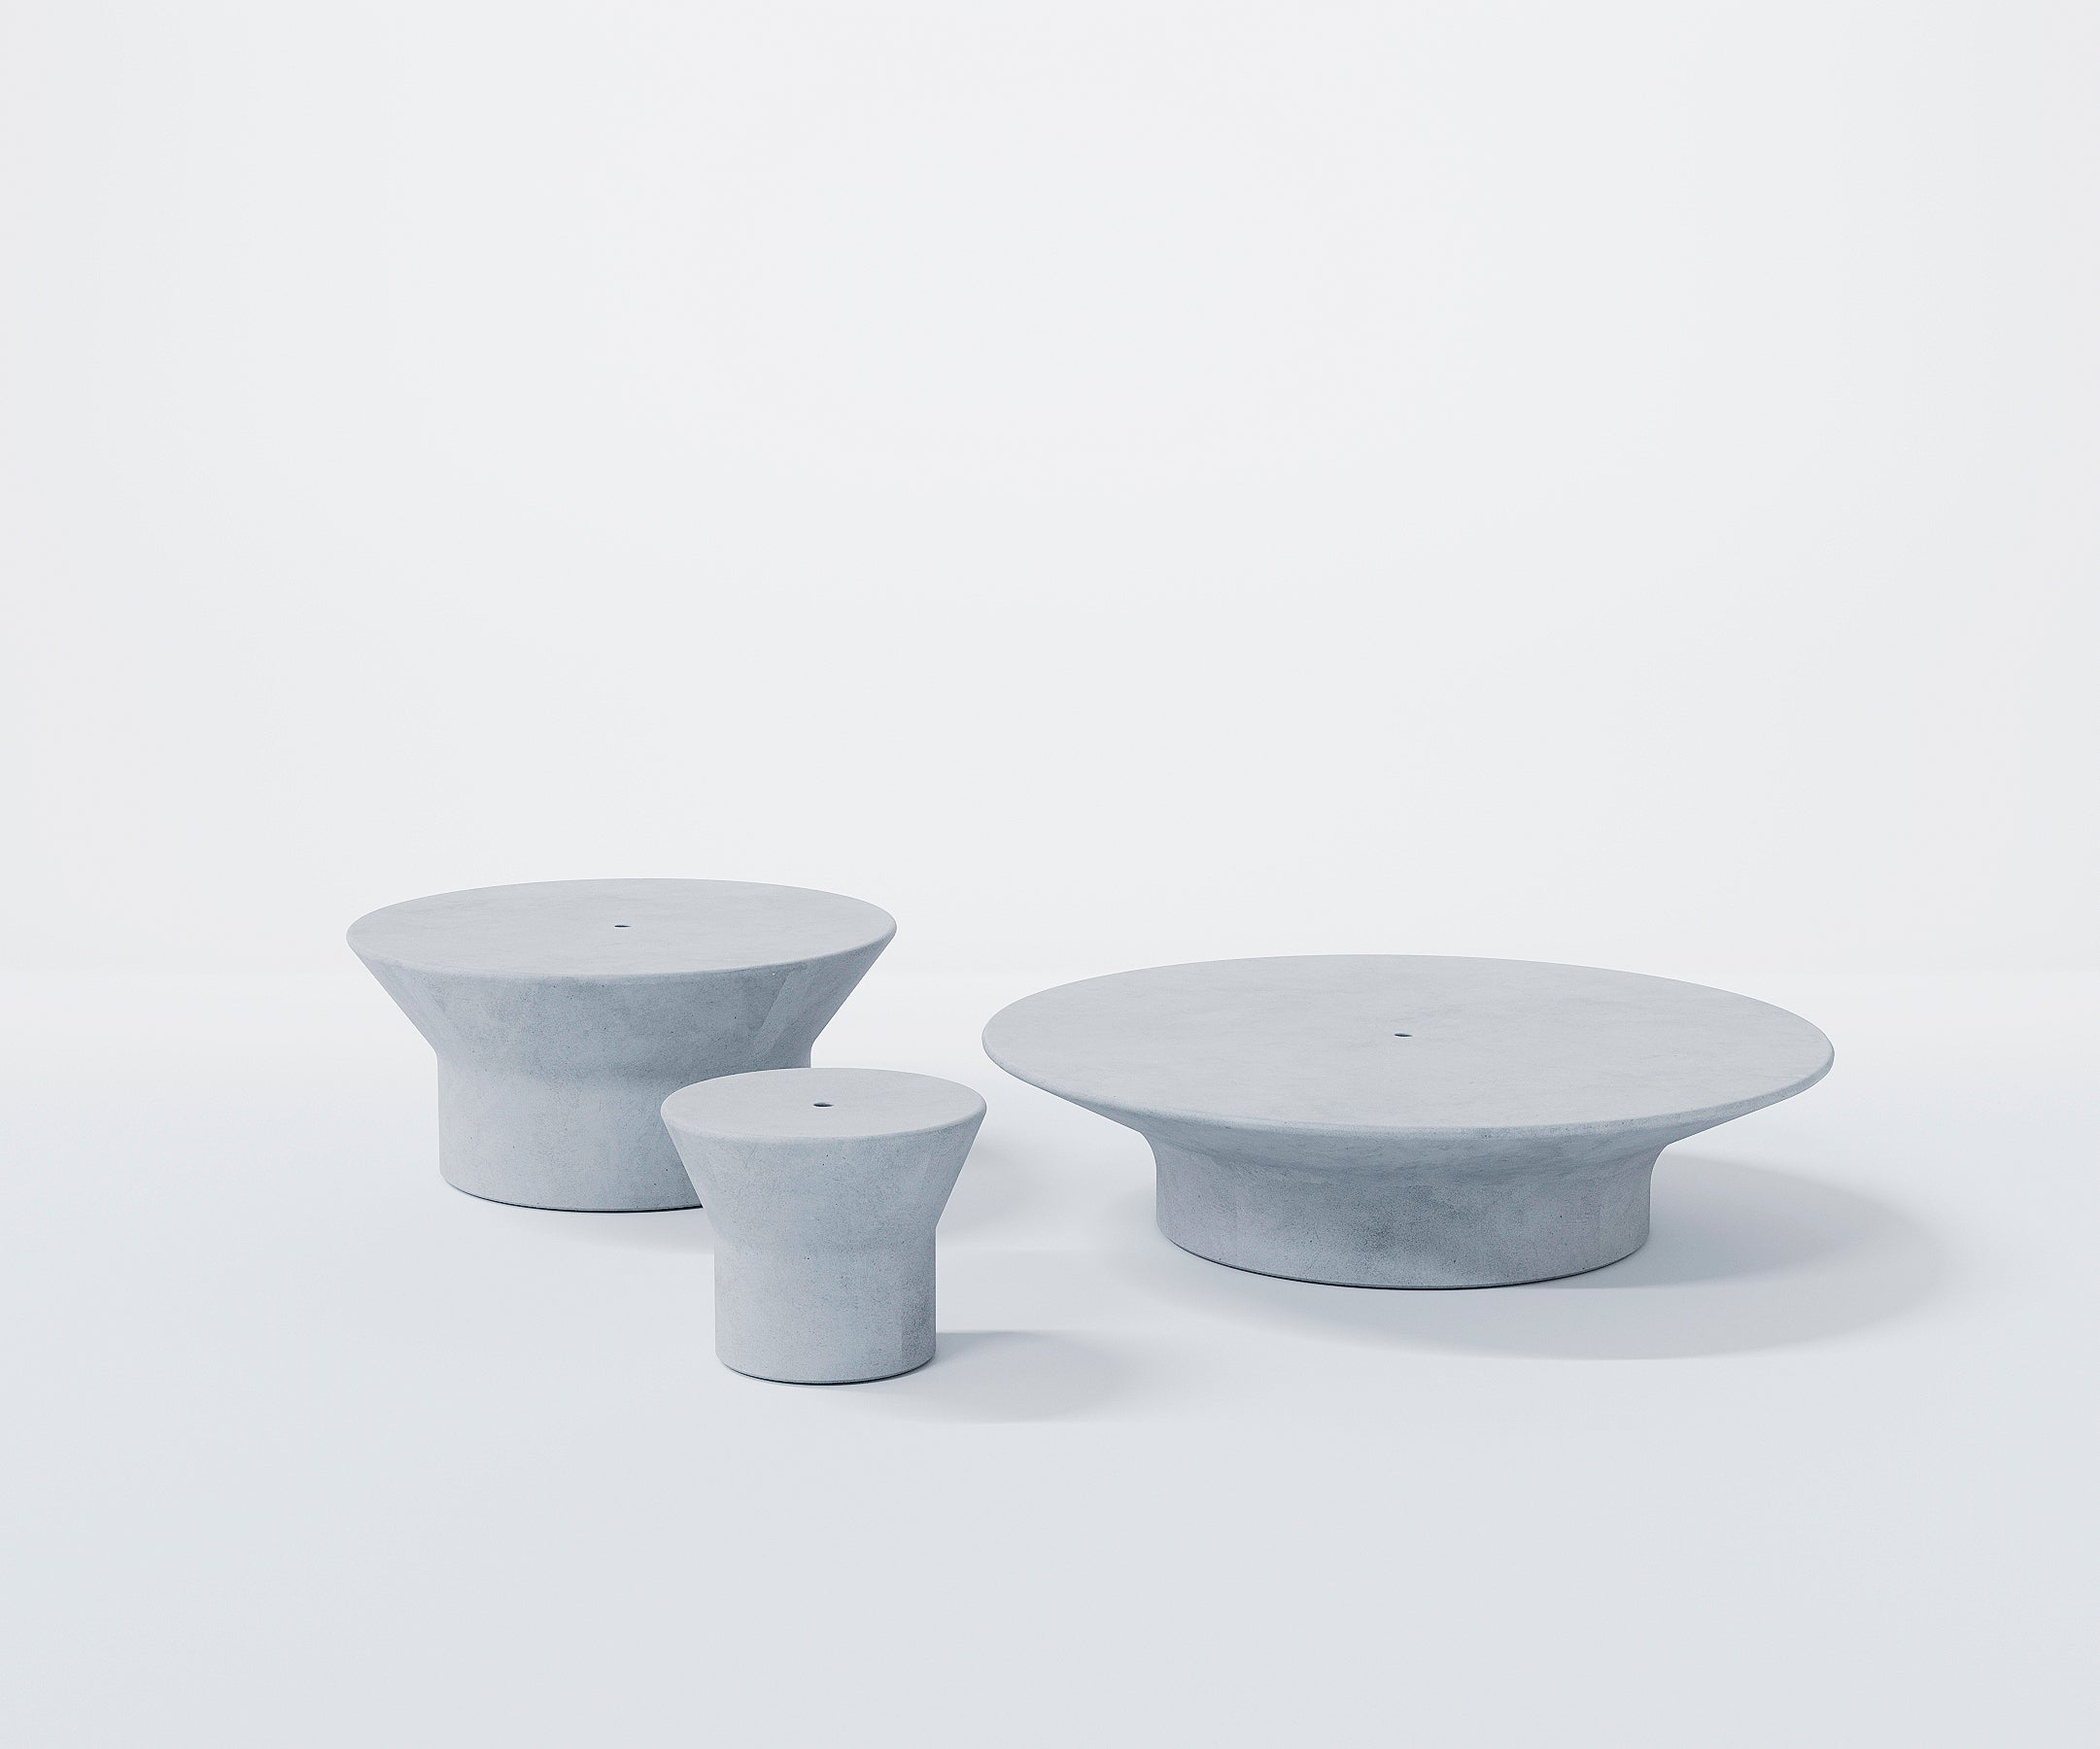 SMALL FUNGI STOOL / TABLE